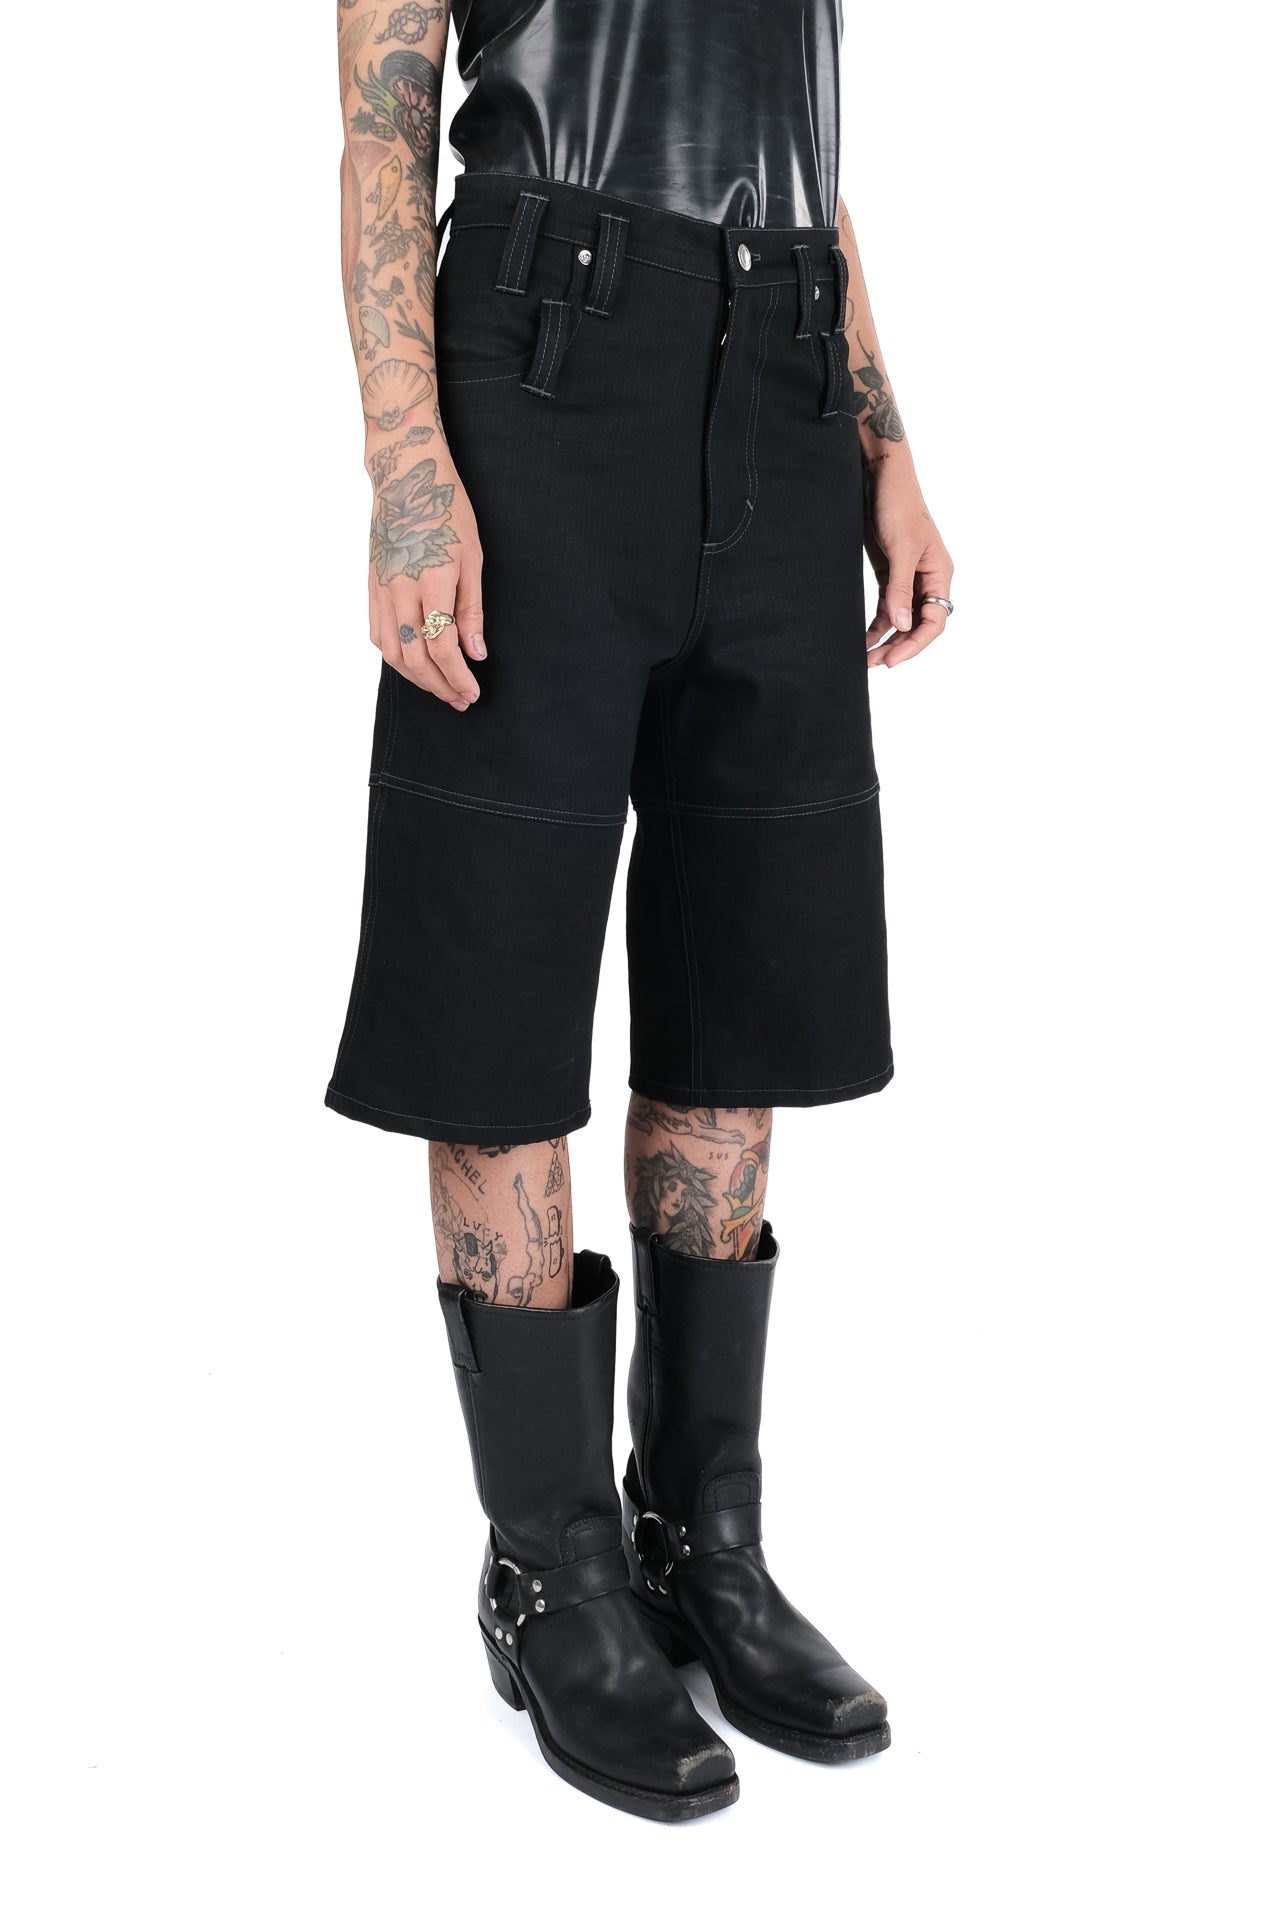 Black Denim Bondage Shorts